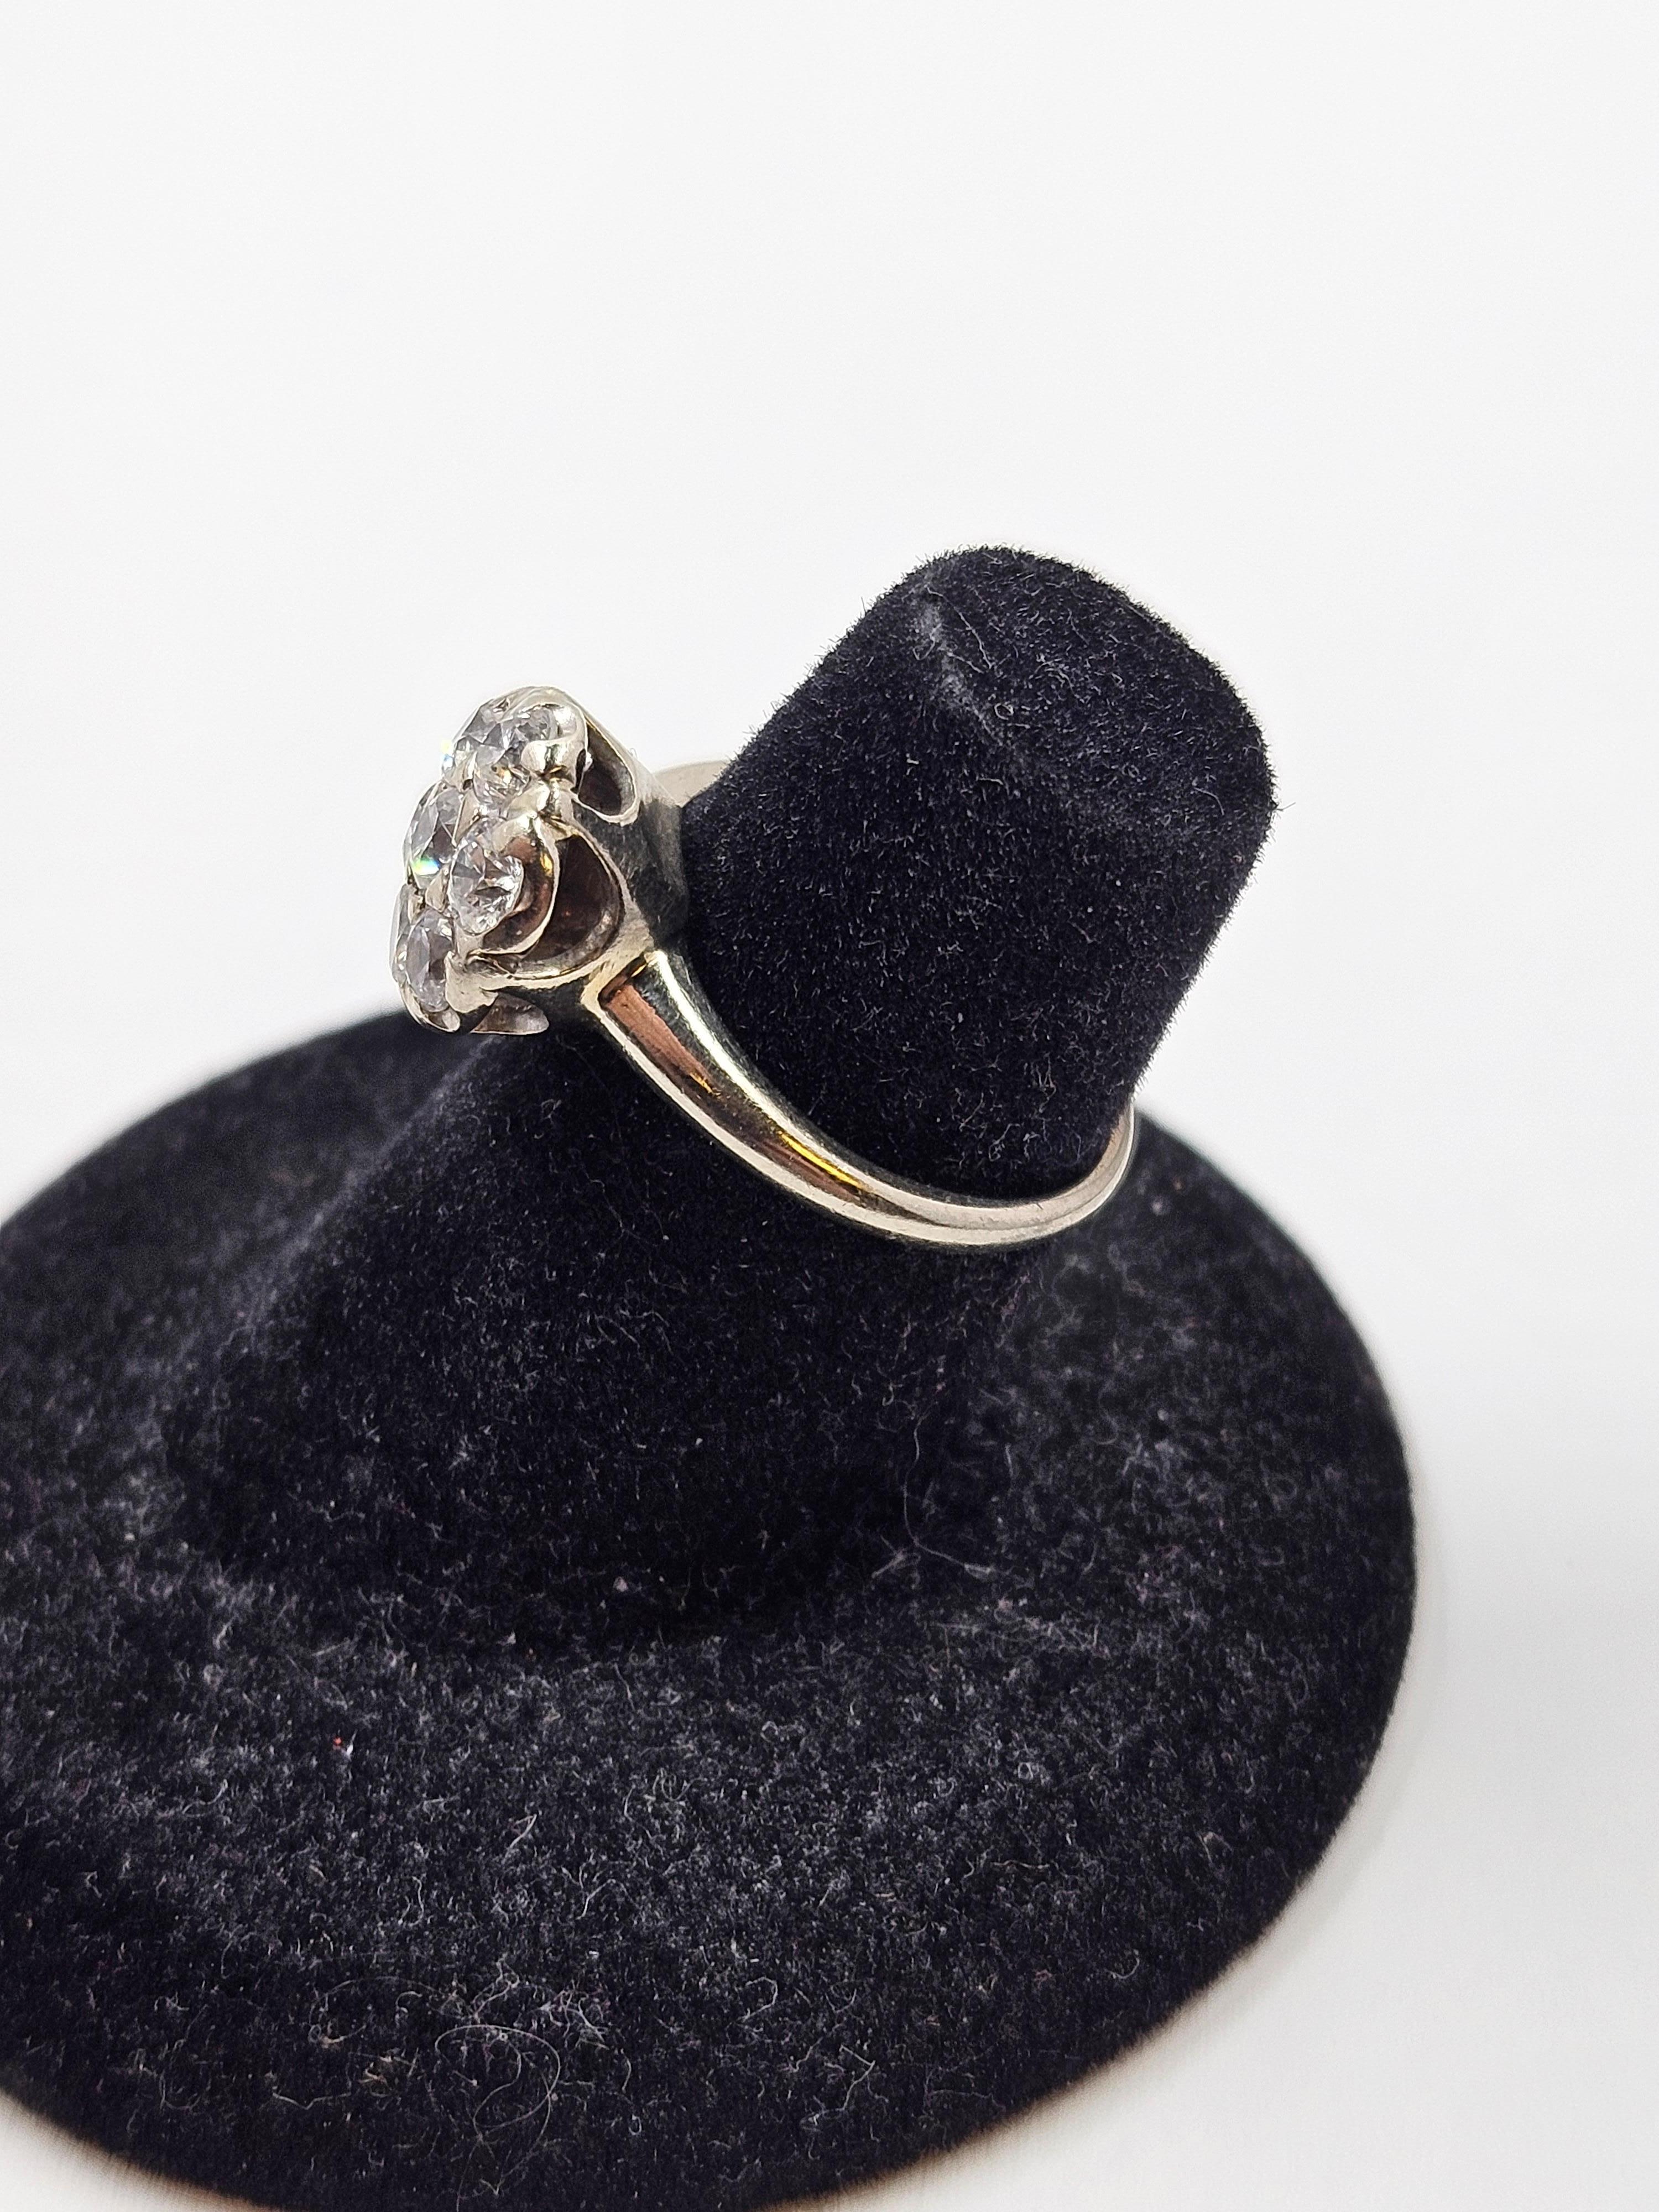 Antique Art Deco 18K White Gold Diamond Cluster Ring For Sale 1